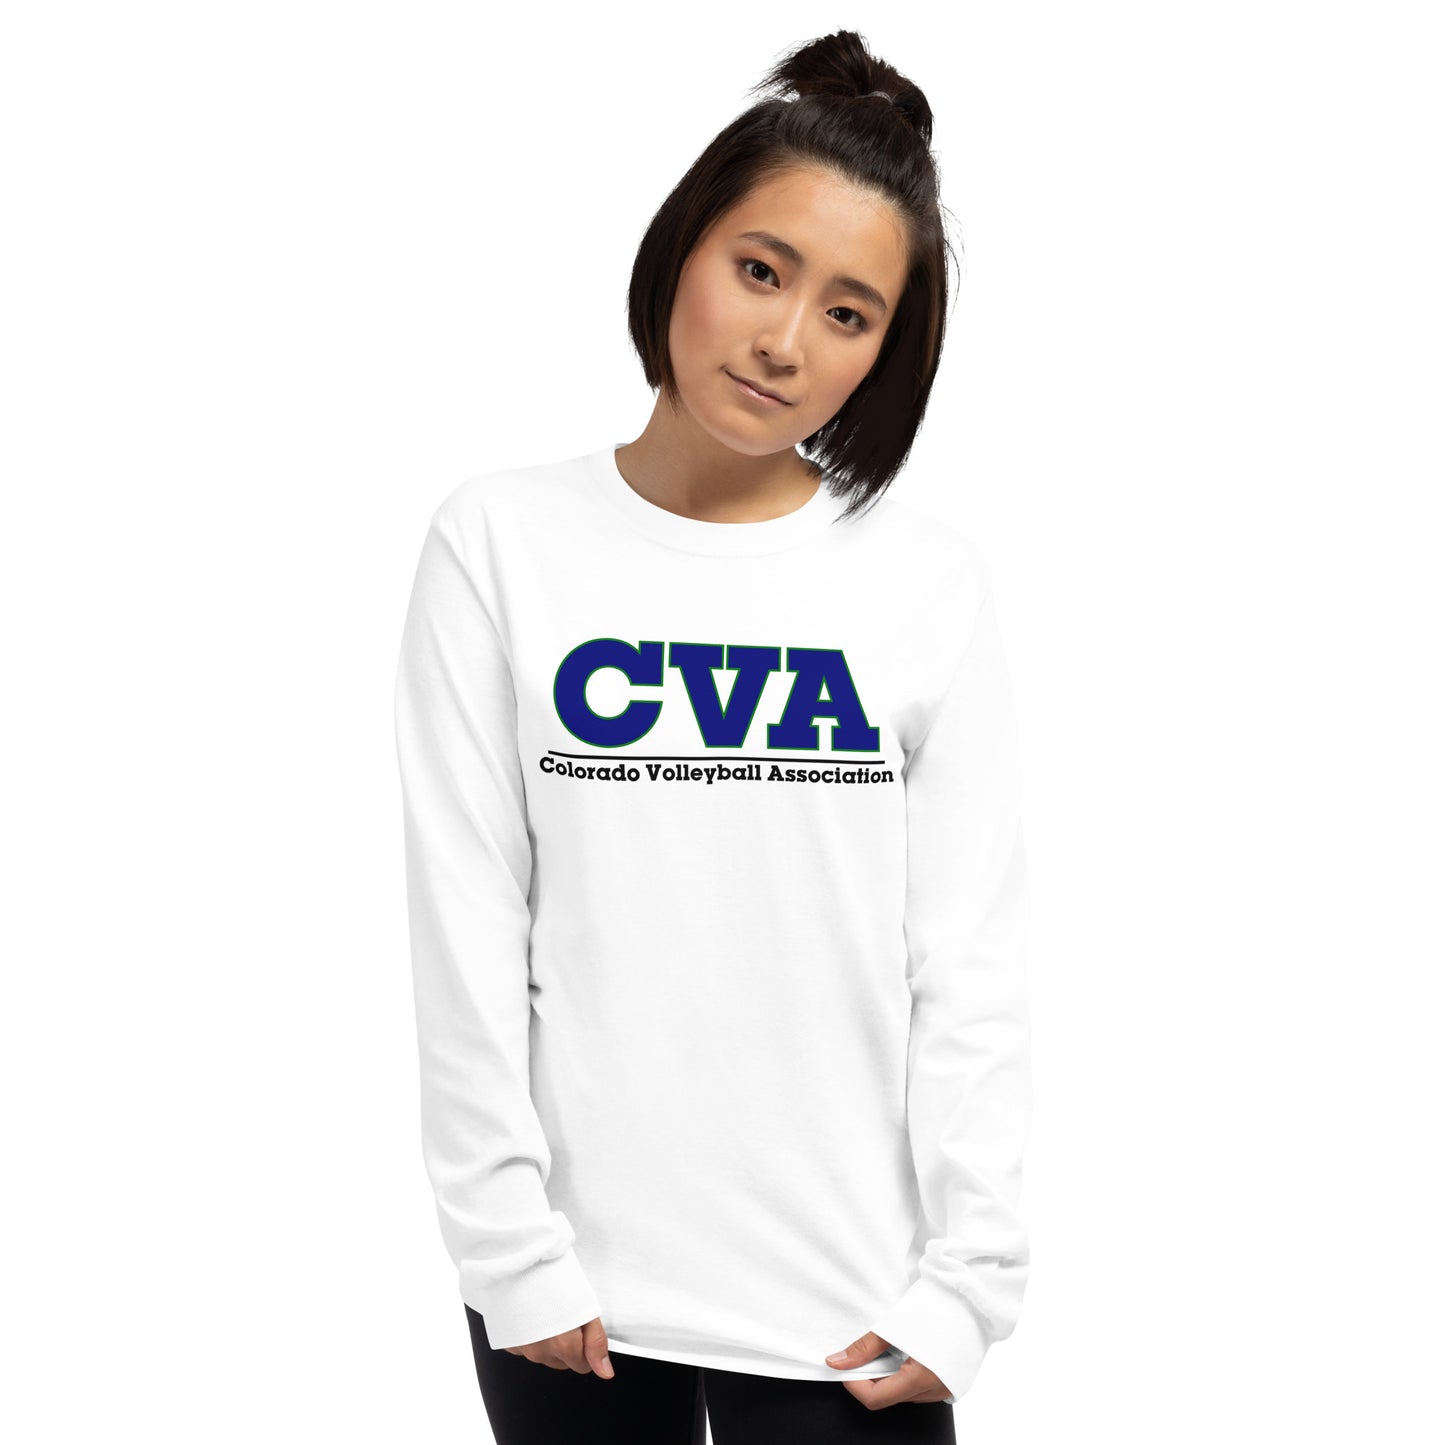 Unisex Long Sleeve Shirt: Blue CVA Logo - Multiple Color Options